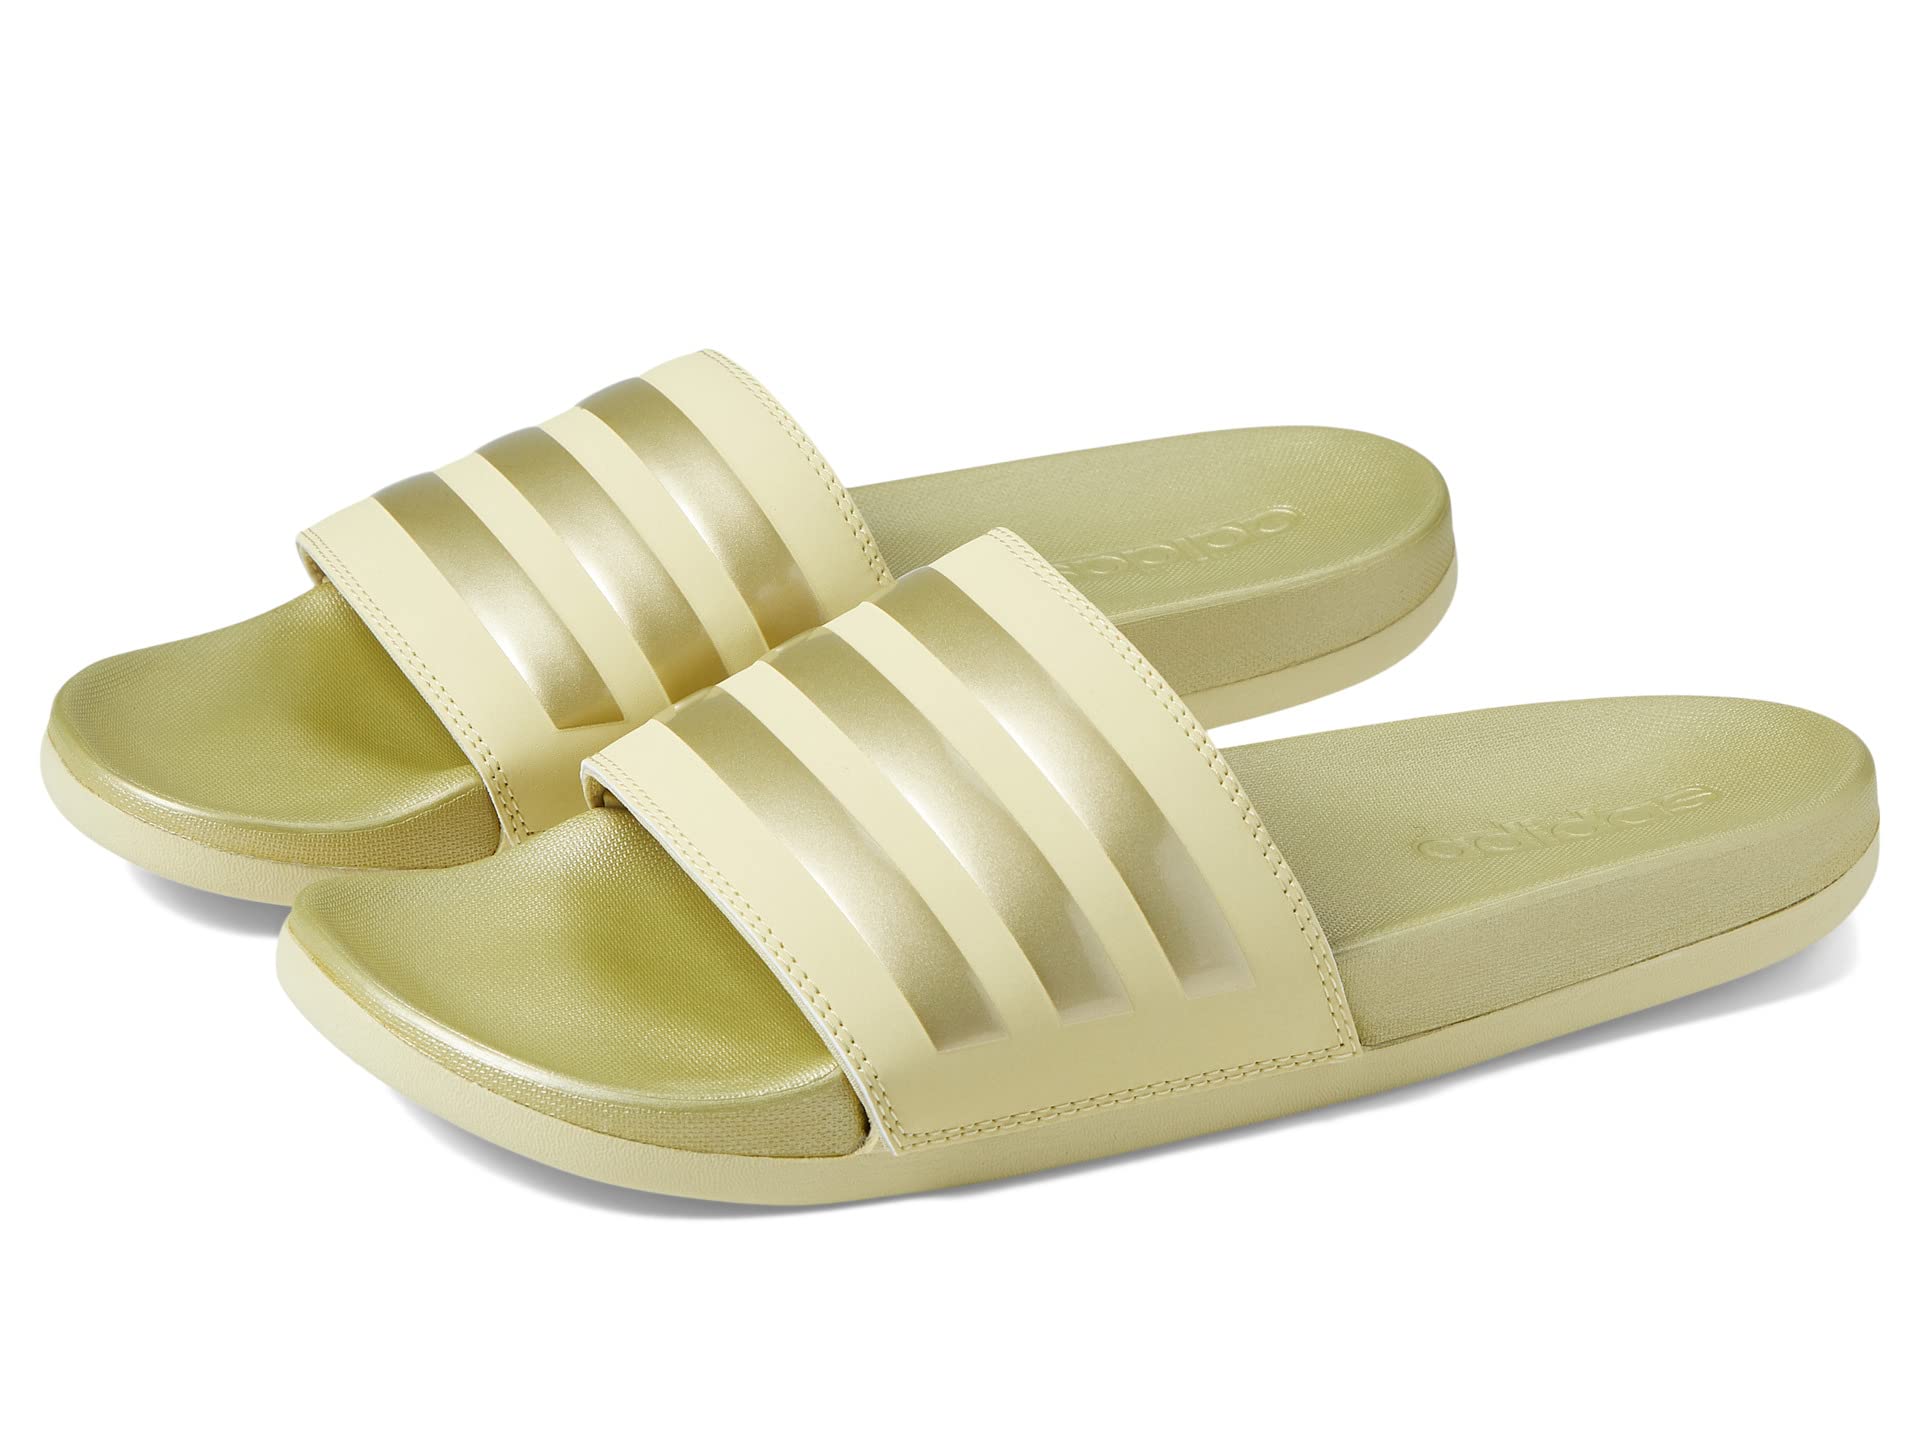 Шлепанцы Adidas Adilette Comfort, бежевый сандалии adidas adilette comfort цвет sandy beige sandy beige metallic sandy beige metallic